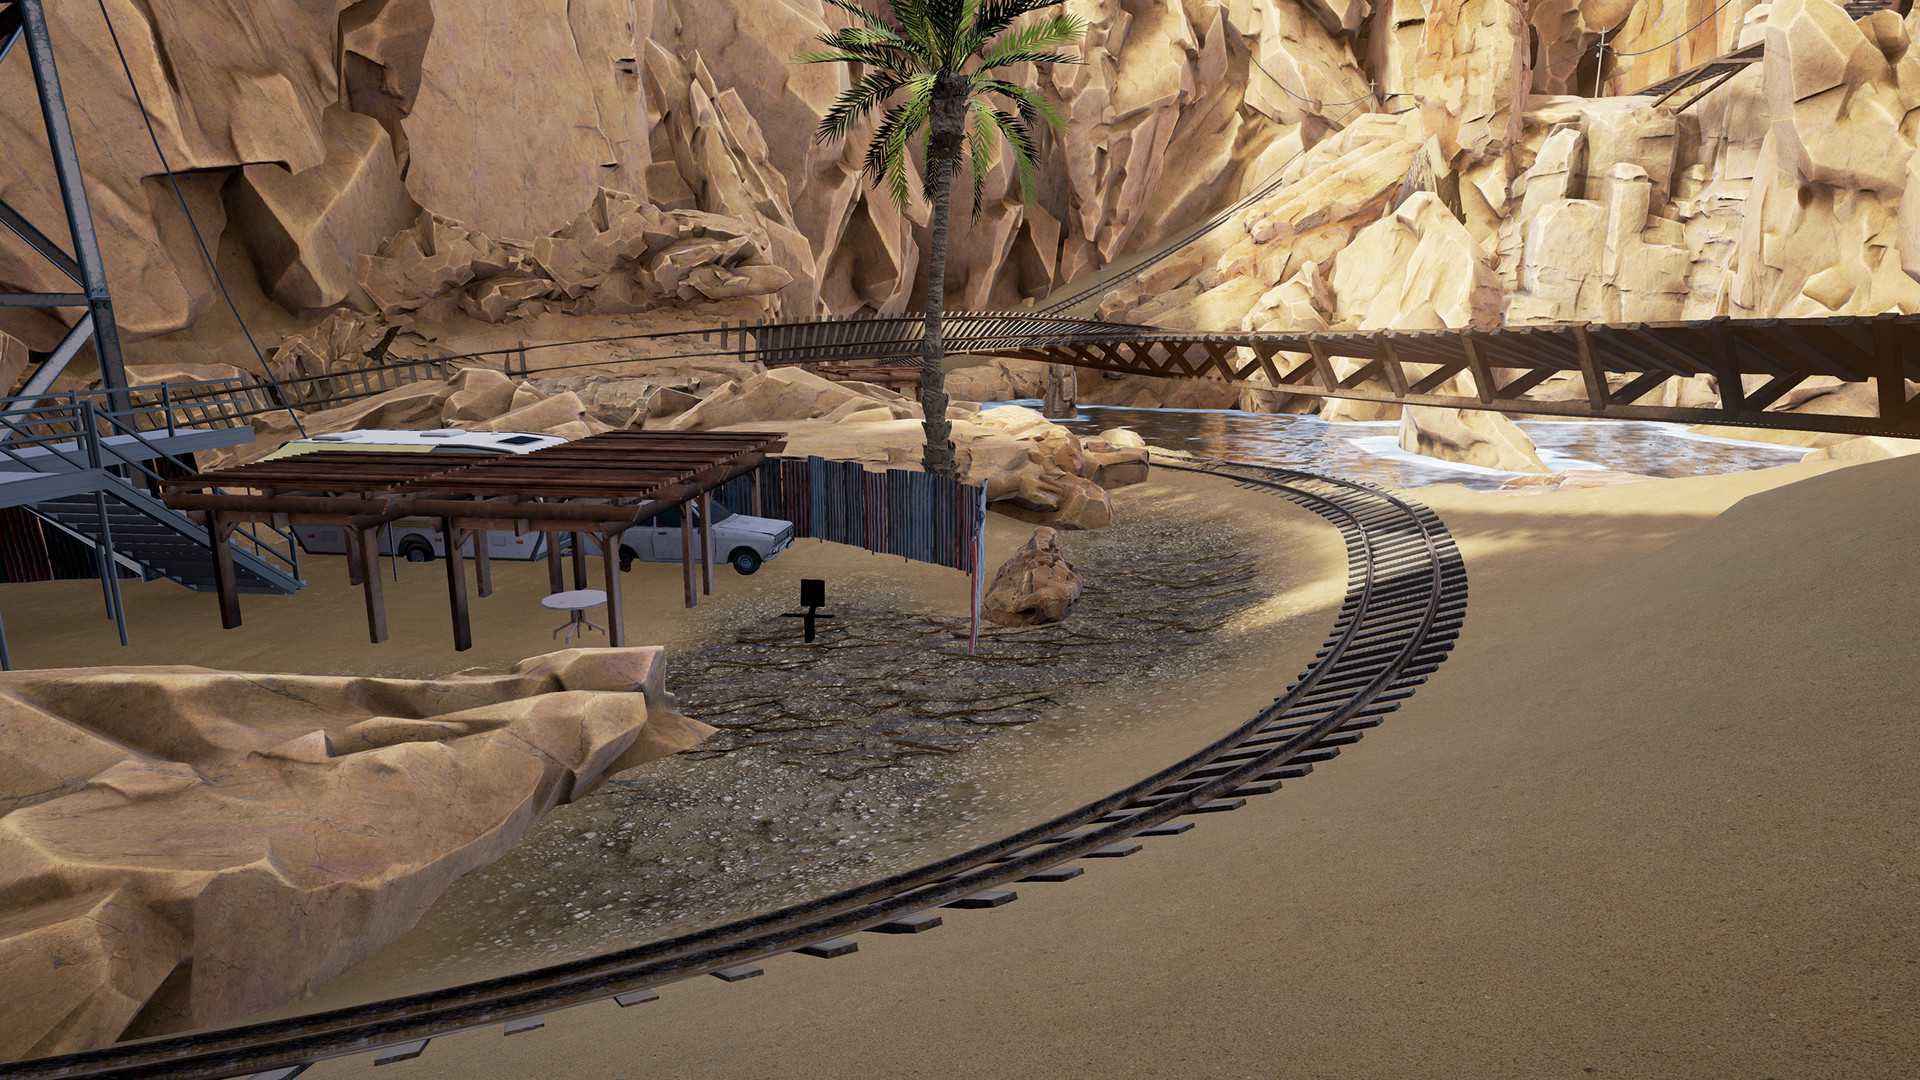 Desert Ride Coaster